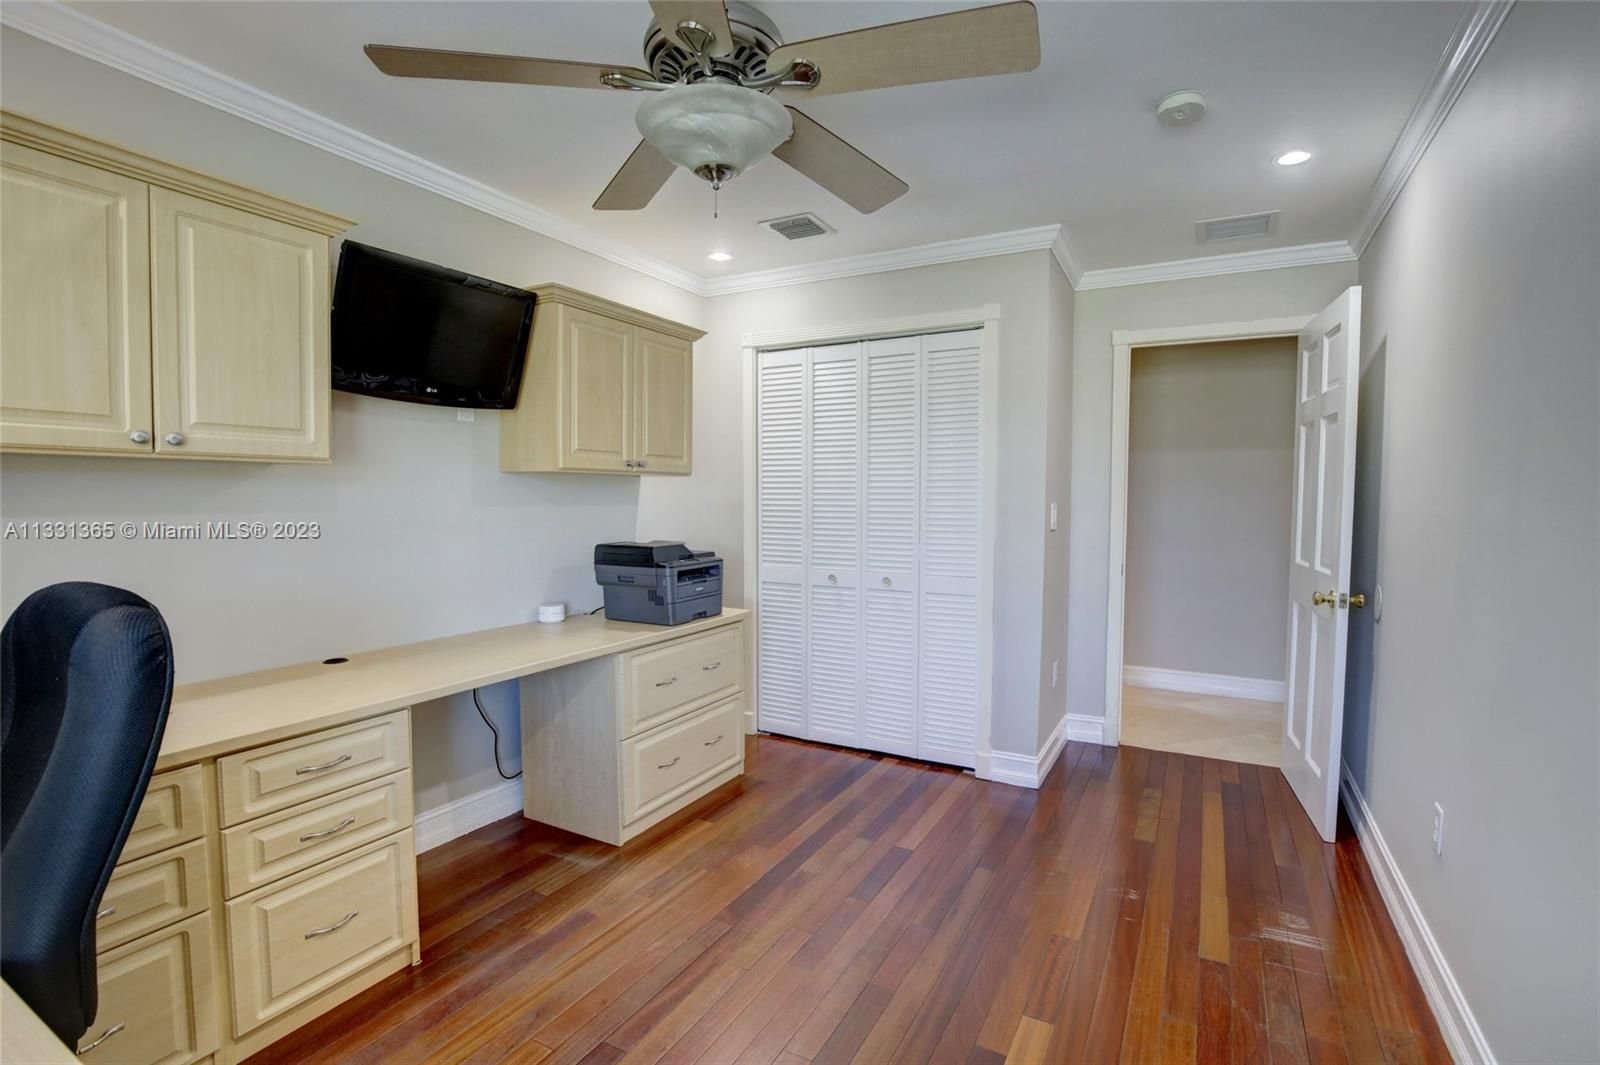 Real estate property located at 10440 120th St, Miami-Dade County, Miami, FL